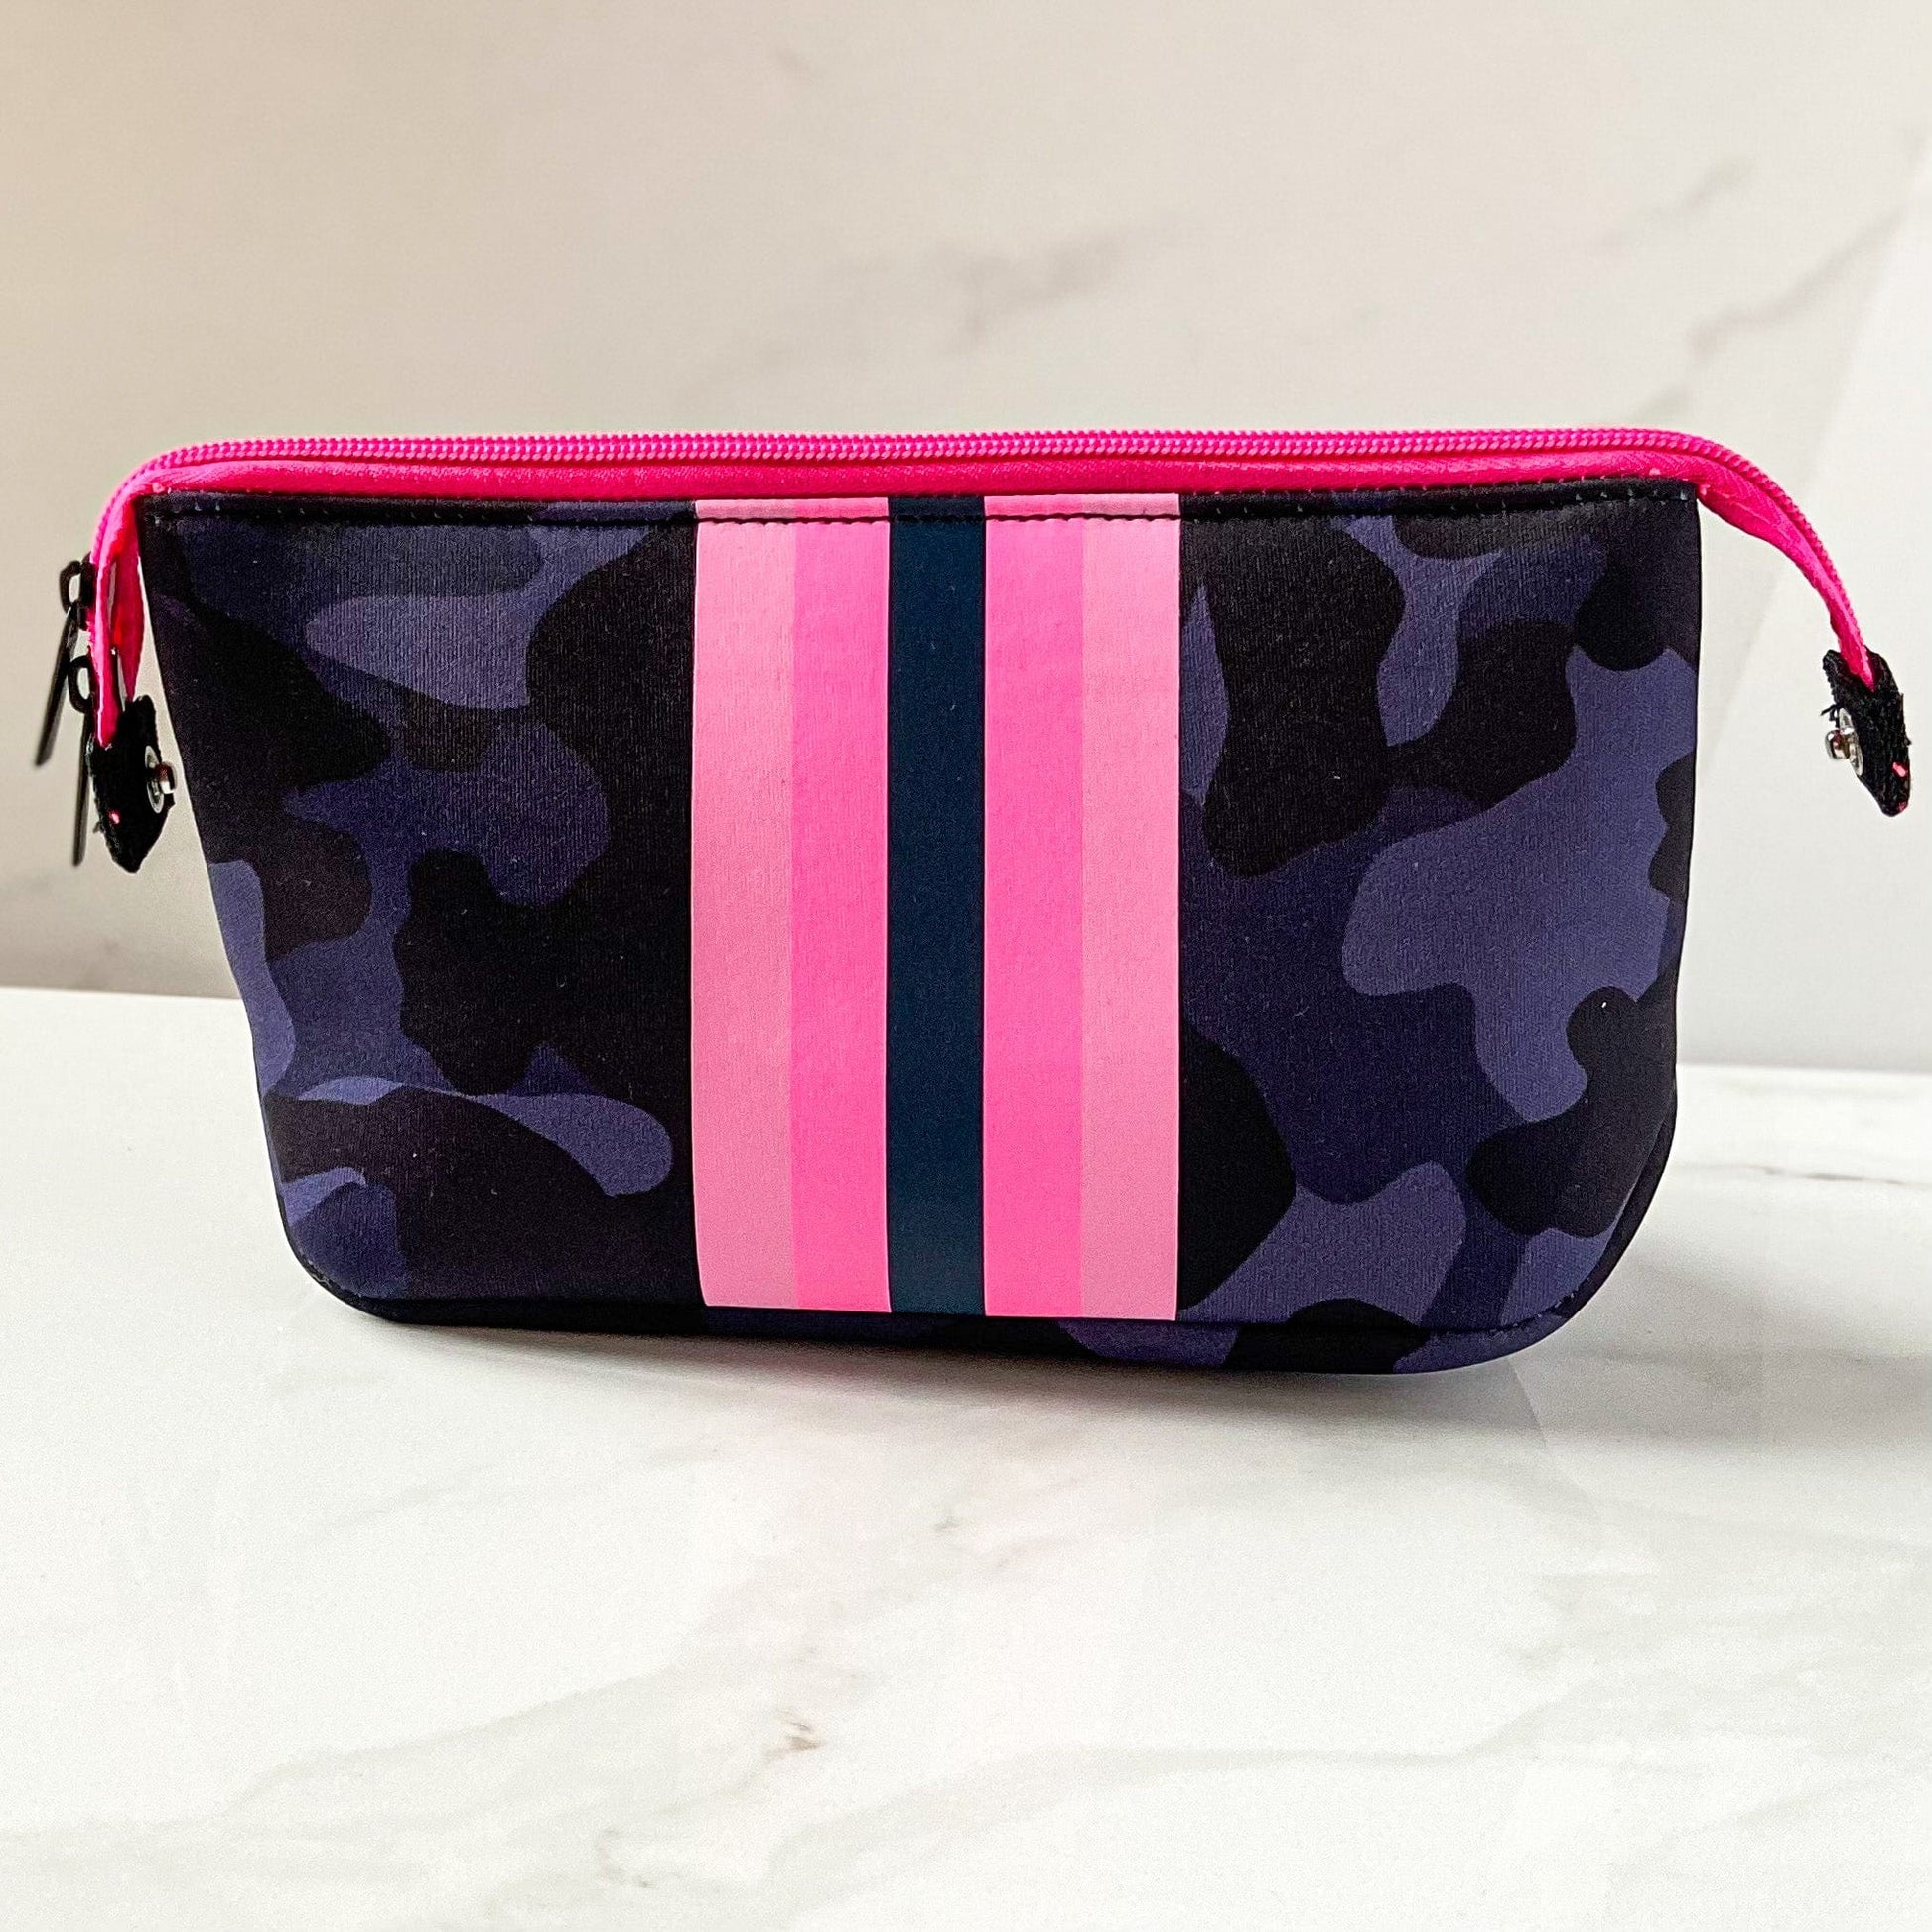 neoprene makeup bag in Black camo with pink stripe and zipper